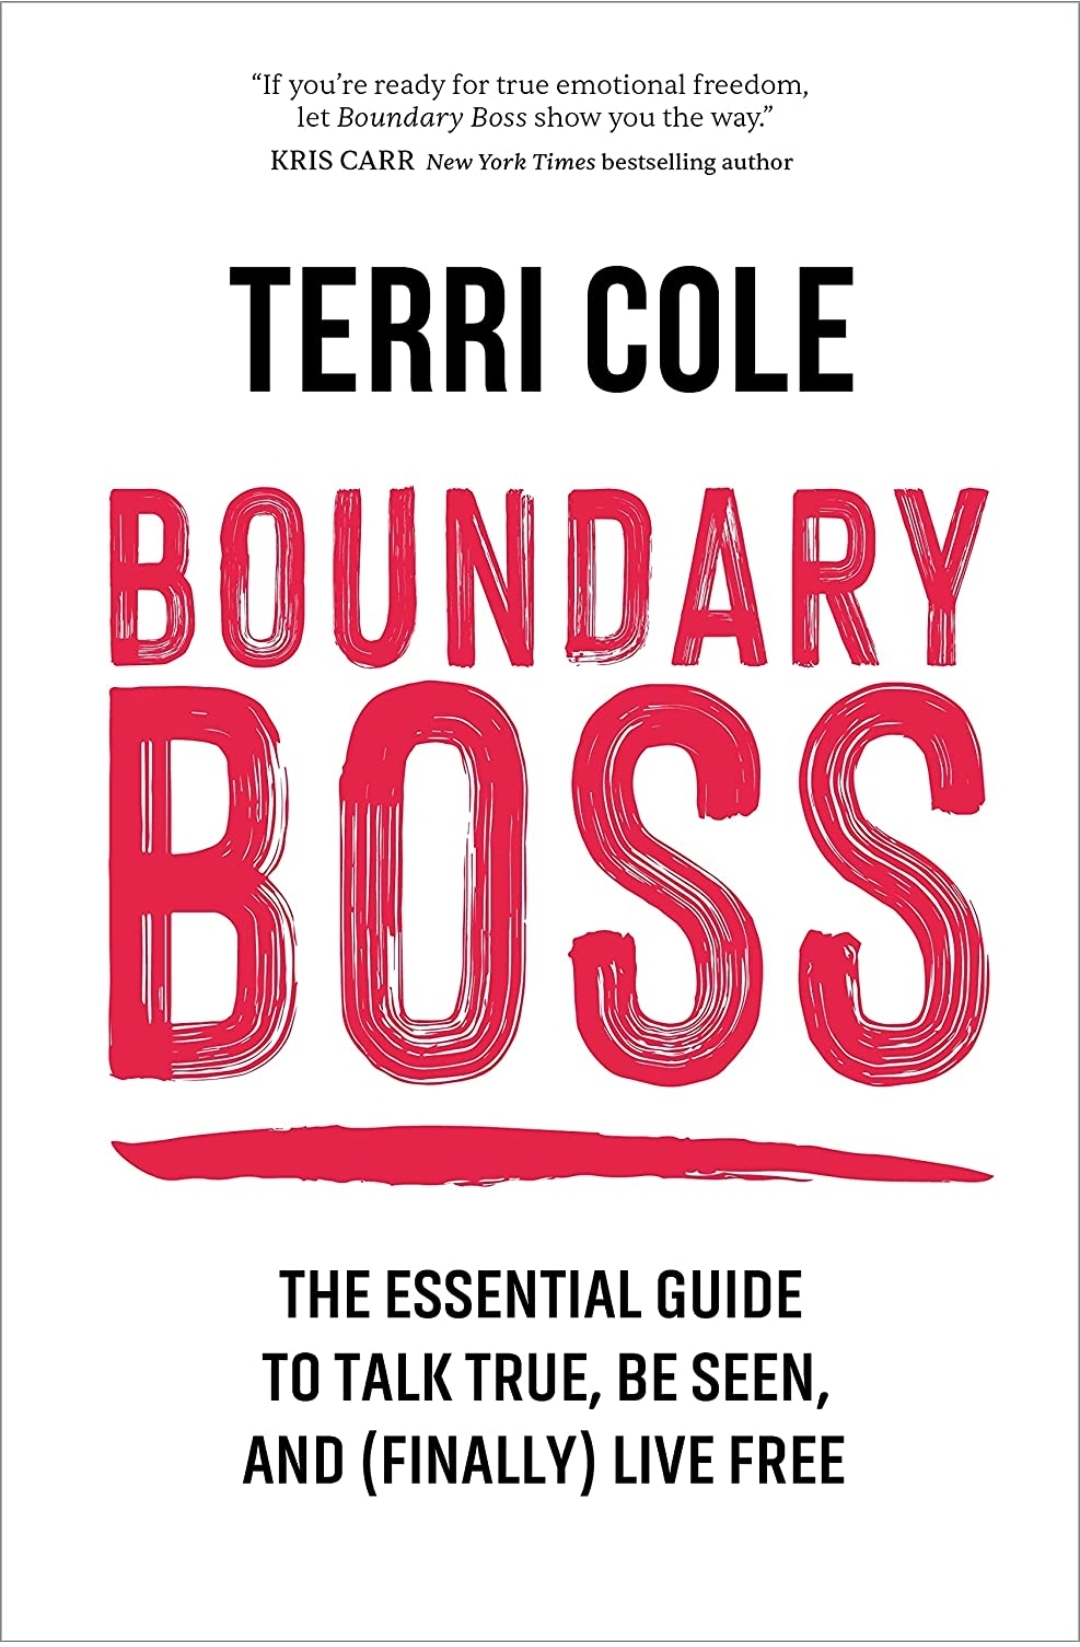 Boundary Boss by Terri Cole